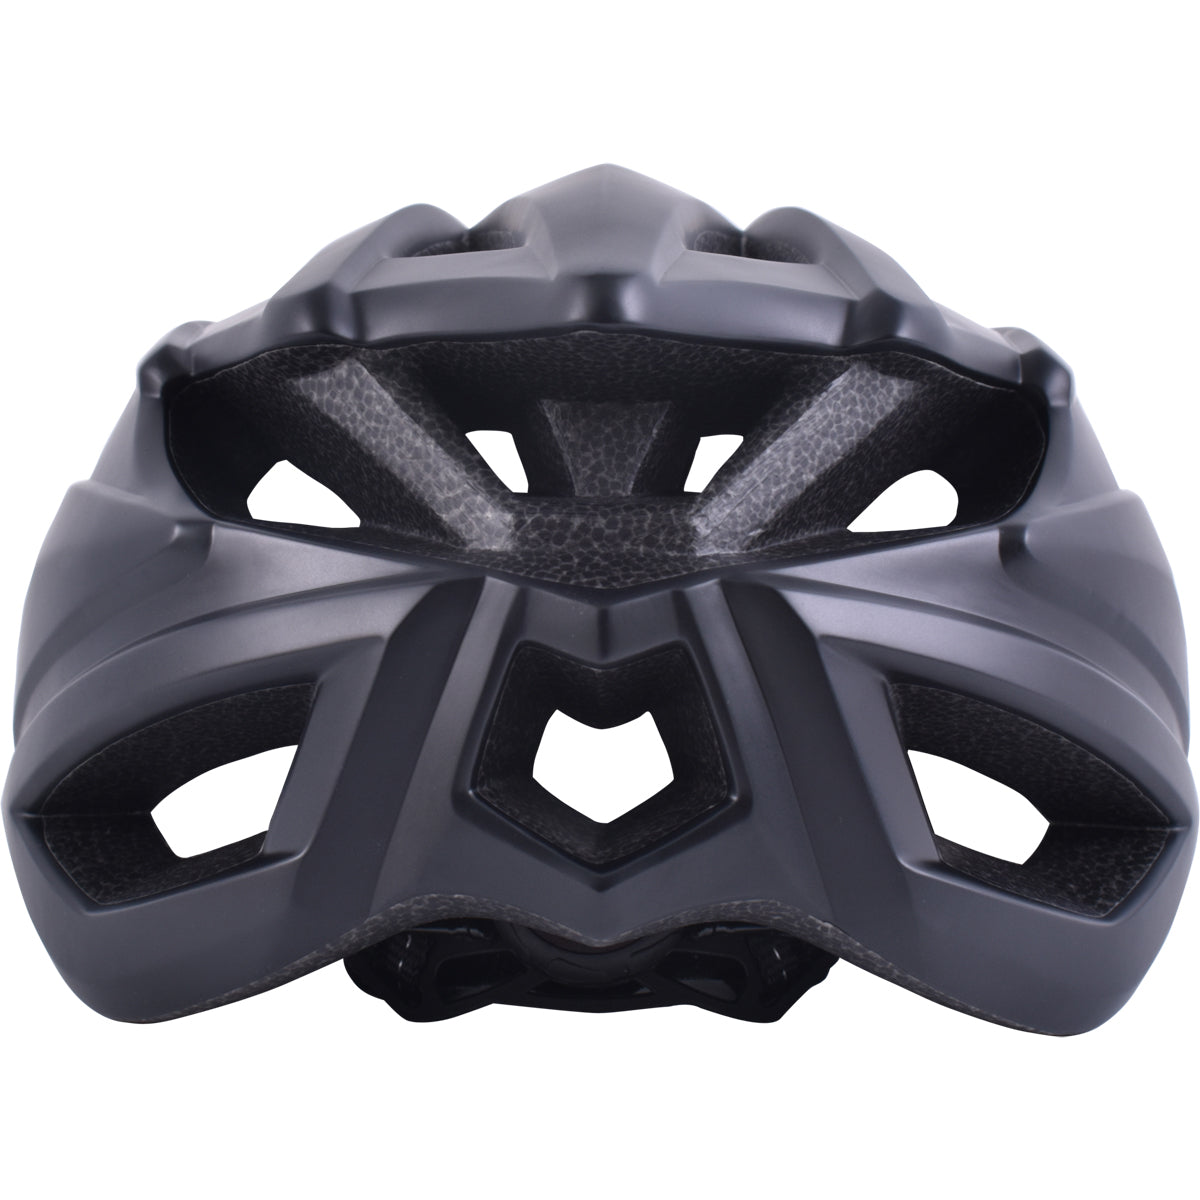 Safety Labs XENO Road Inmold Helmet in Black